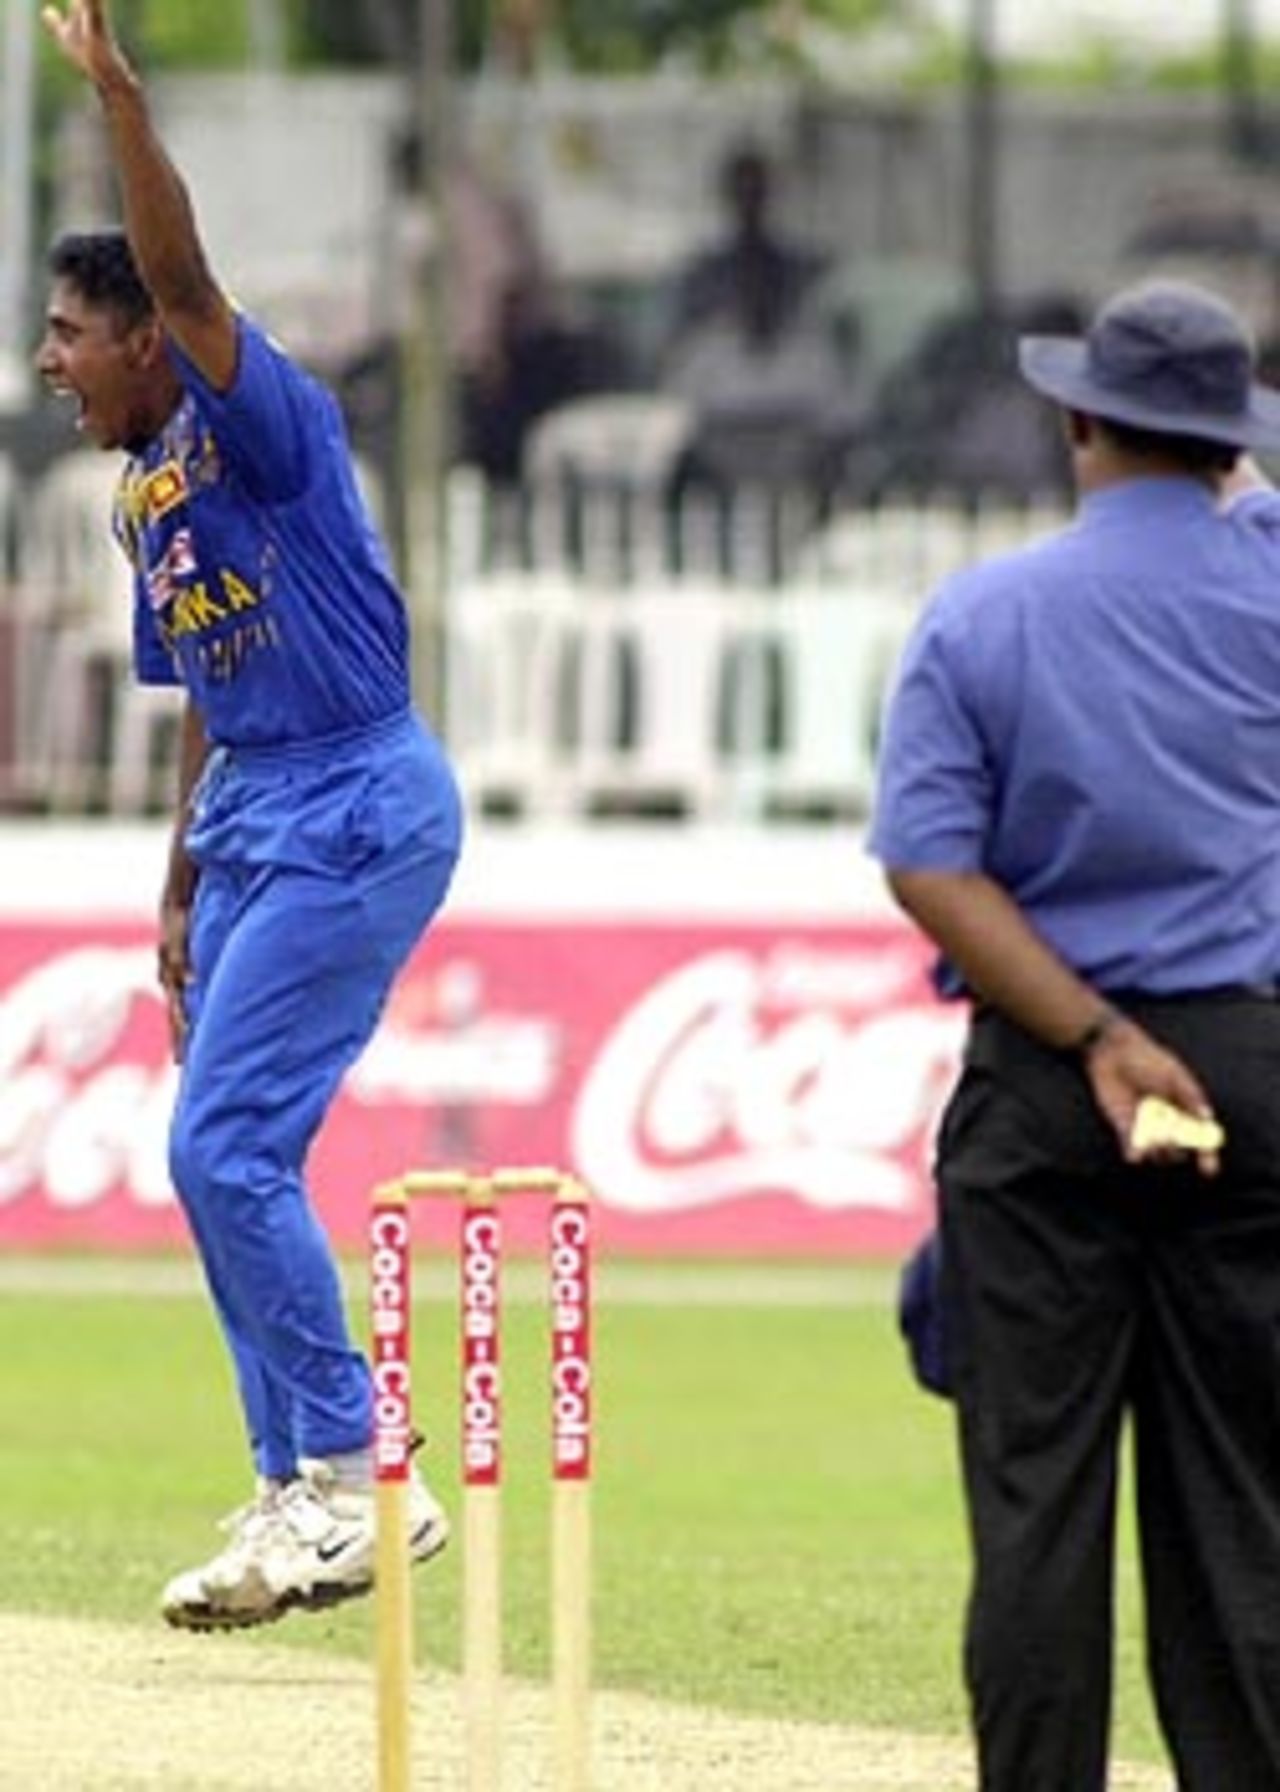 31 July 2001: Coca-Cola Cup (Sri Lanka) 2001, 7th Match, New Zealand v Sri Lanka, Sinhalese Sports Club, Colombo